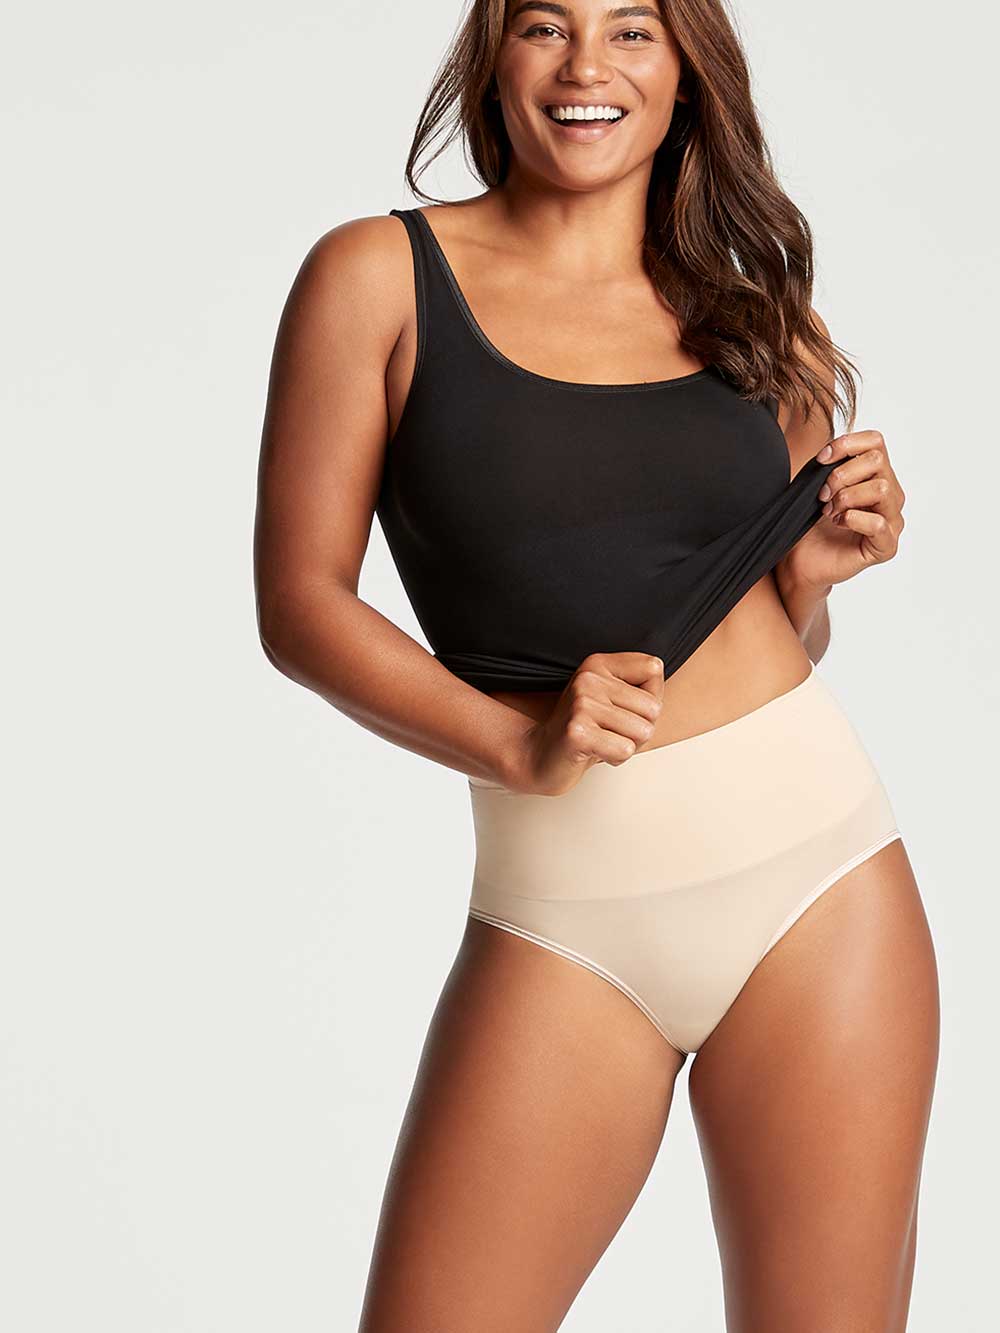 Flarixa Plus Size Body Shapers Women High Waist Belly Control